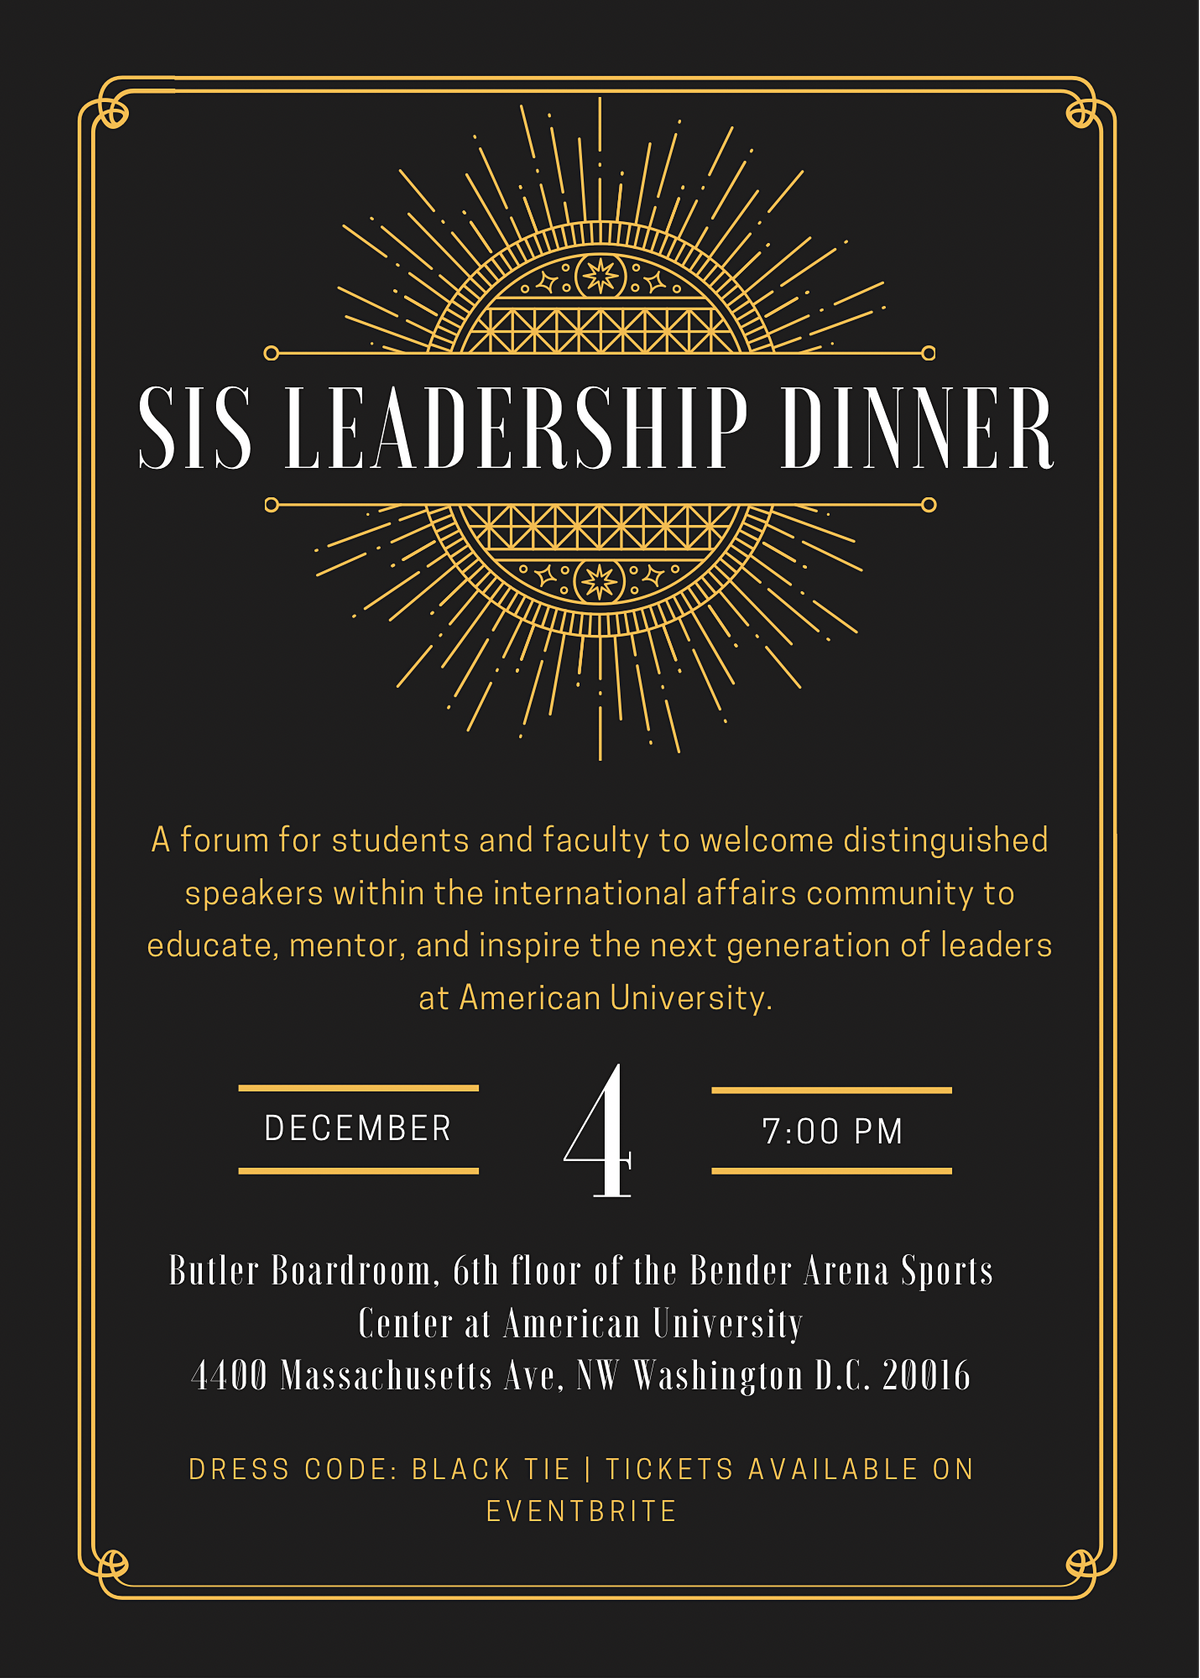 The American University SIS Leadership Dinner